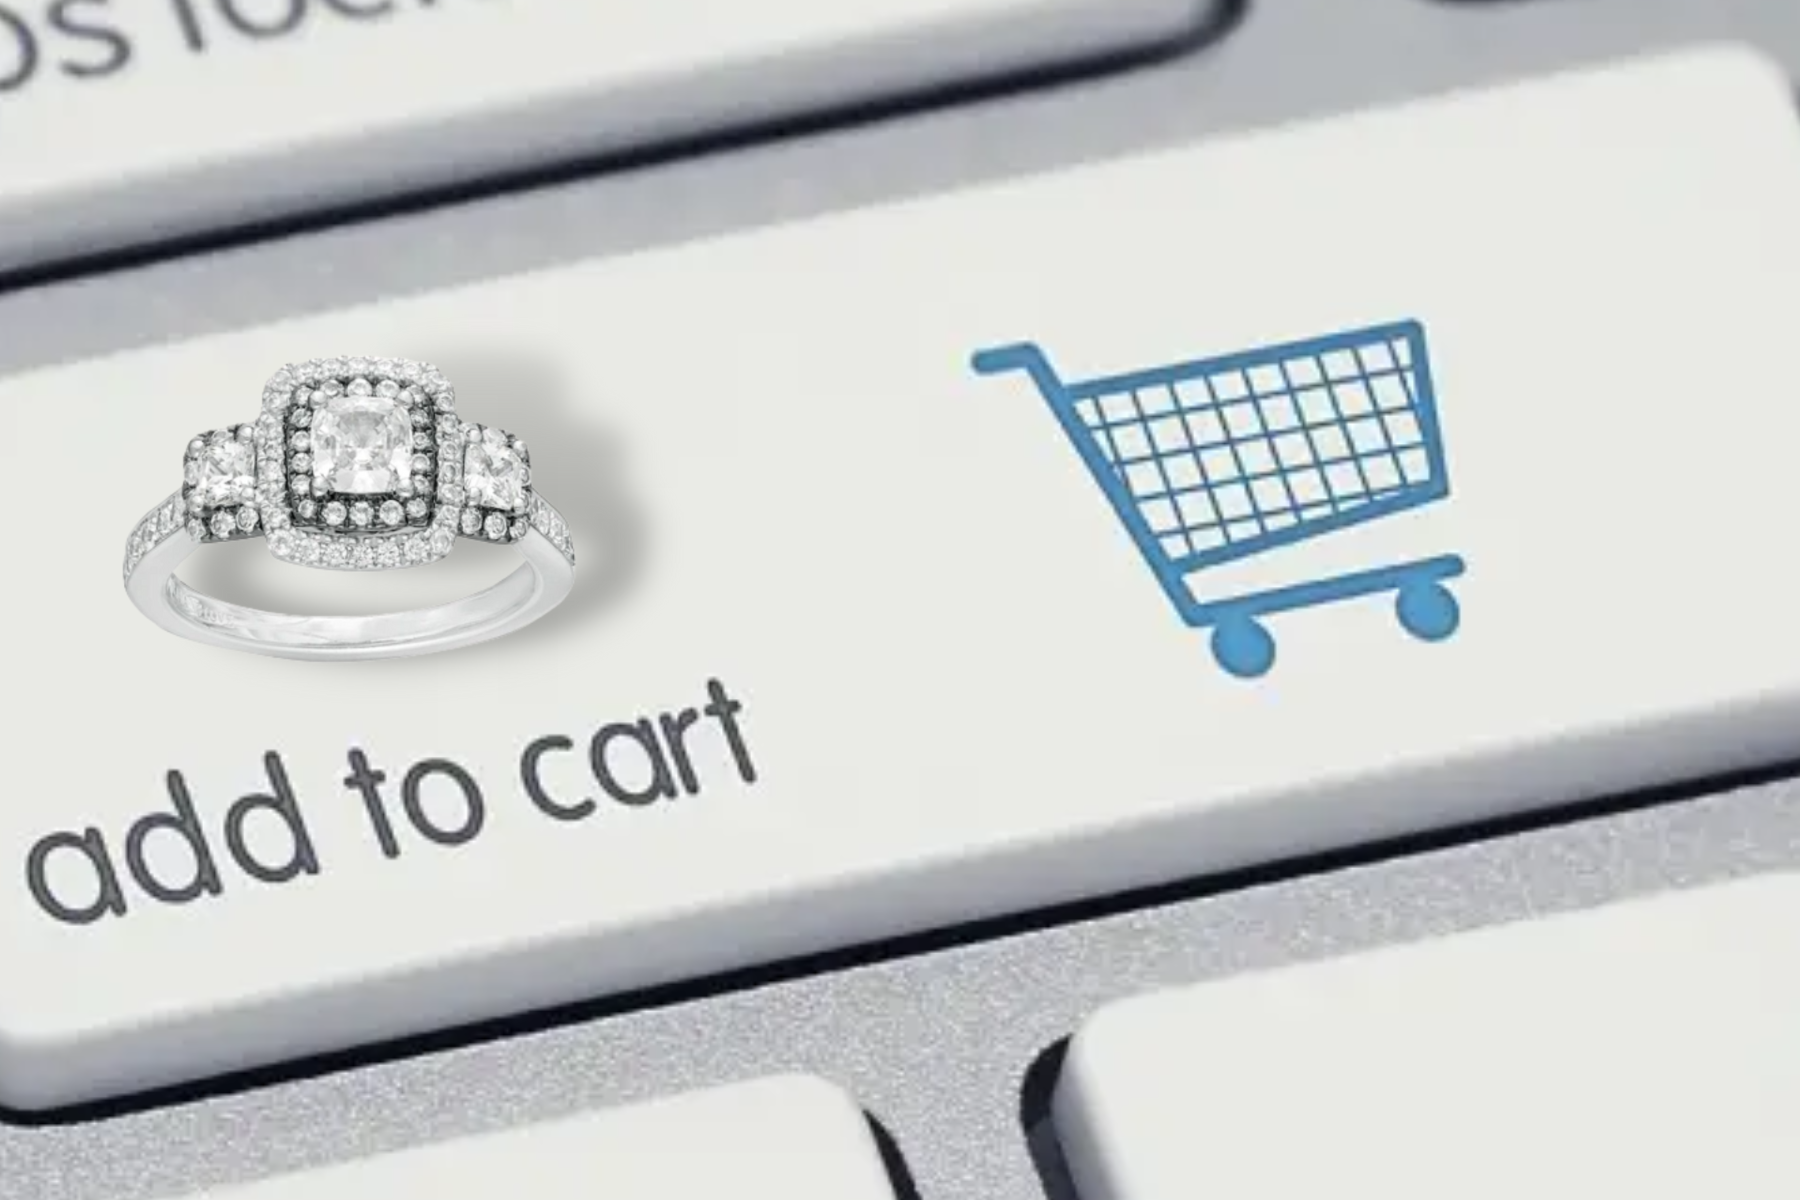 A cushion-cut diamond ring next to a "add to cart" keyboard button